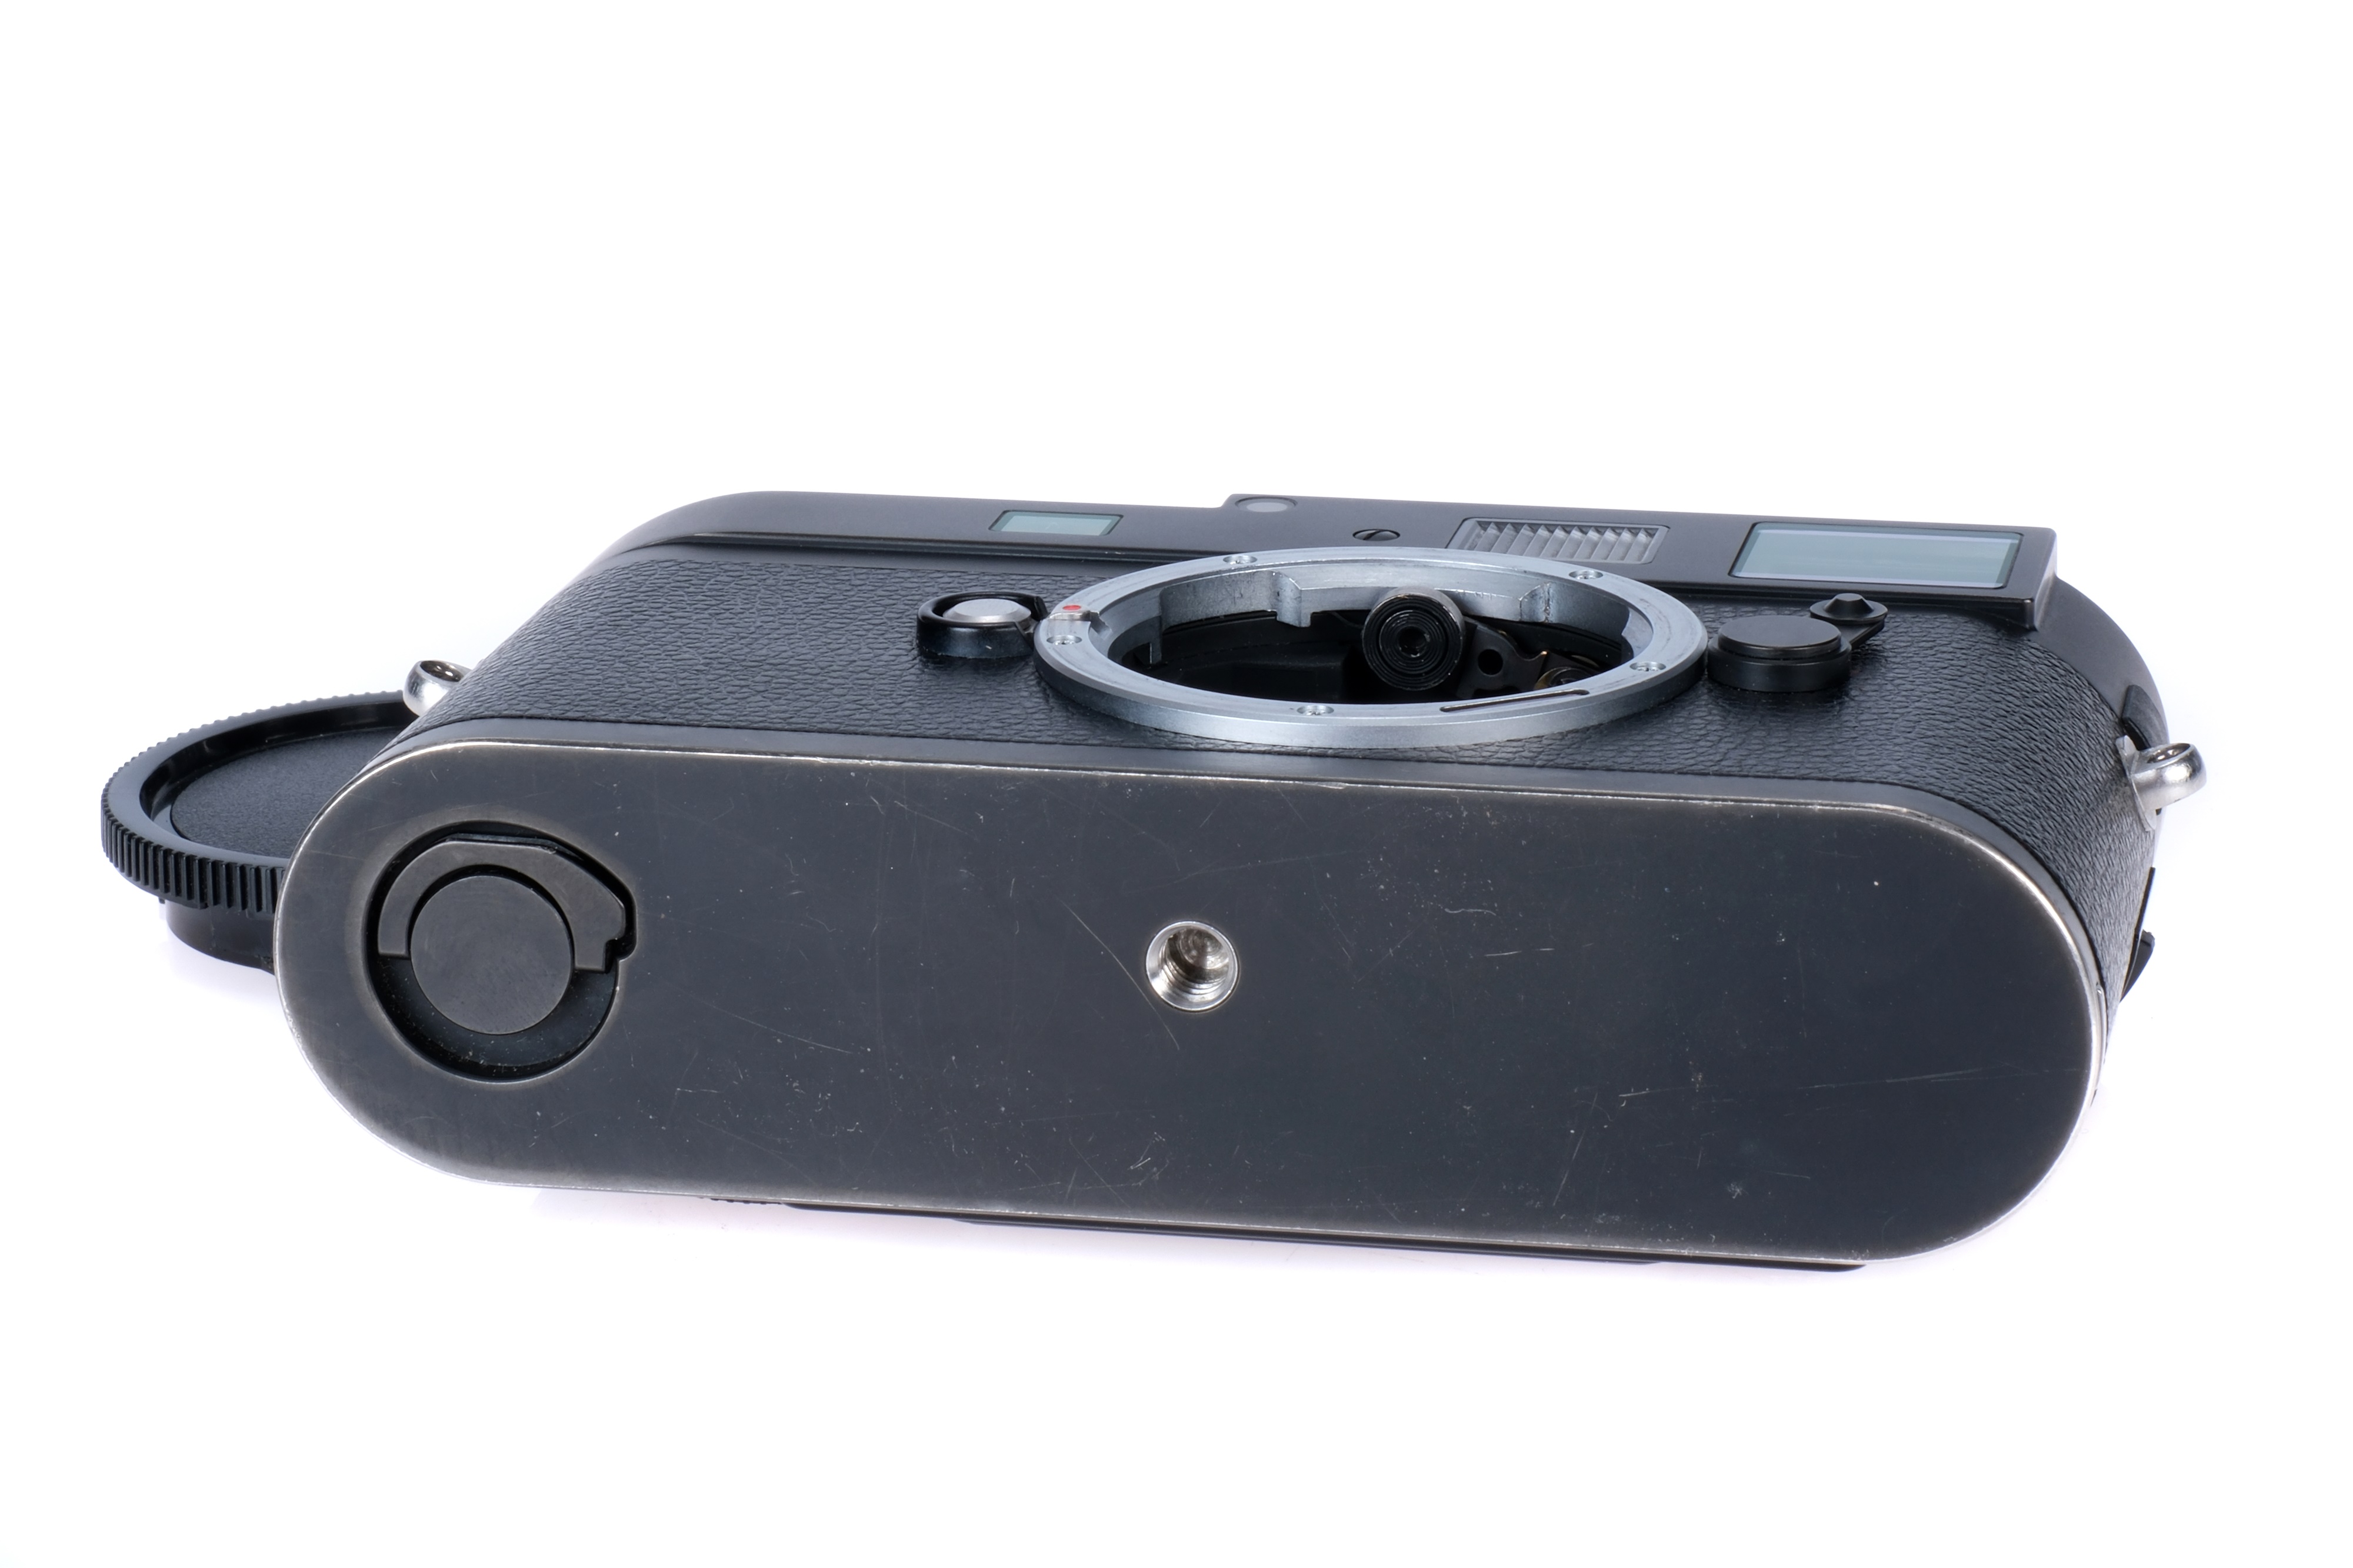 A Leica M Monochrom Prototype Digital Rangefinder Body, - Image 4 of 5